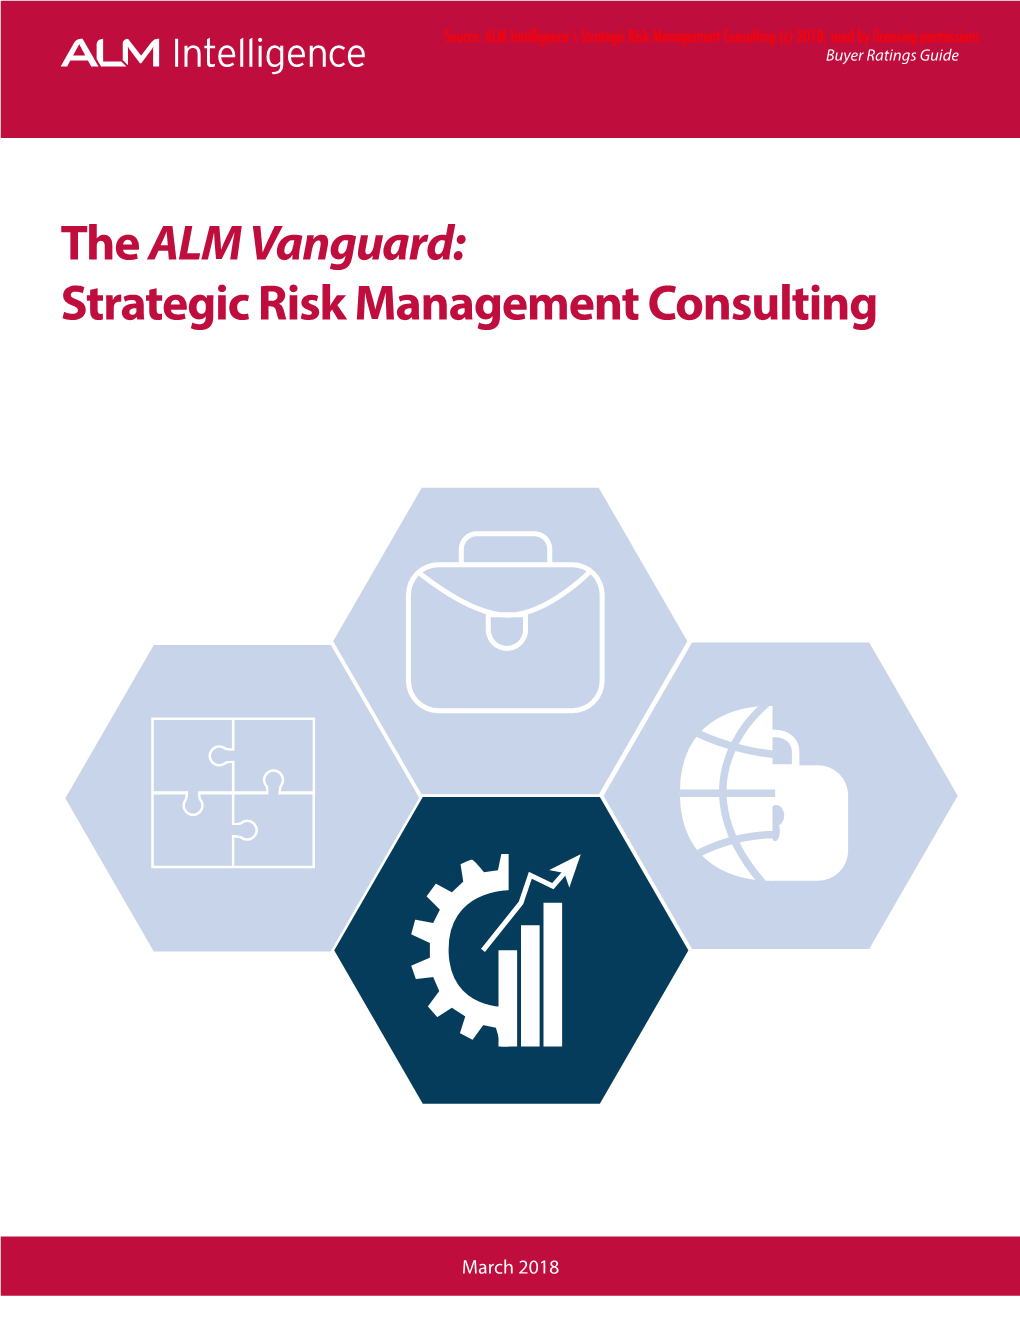 The ALM Vanguard: Strategic Risk Management Consulting